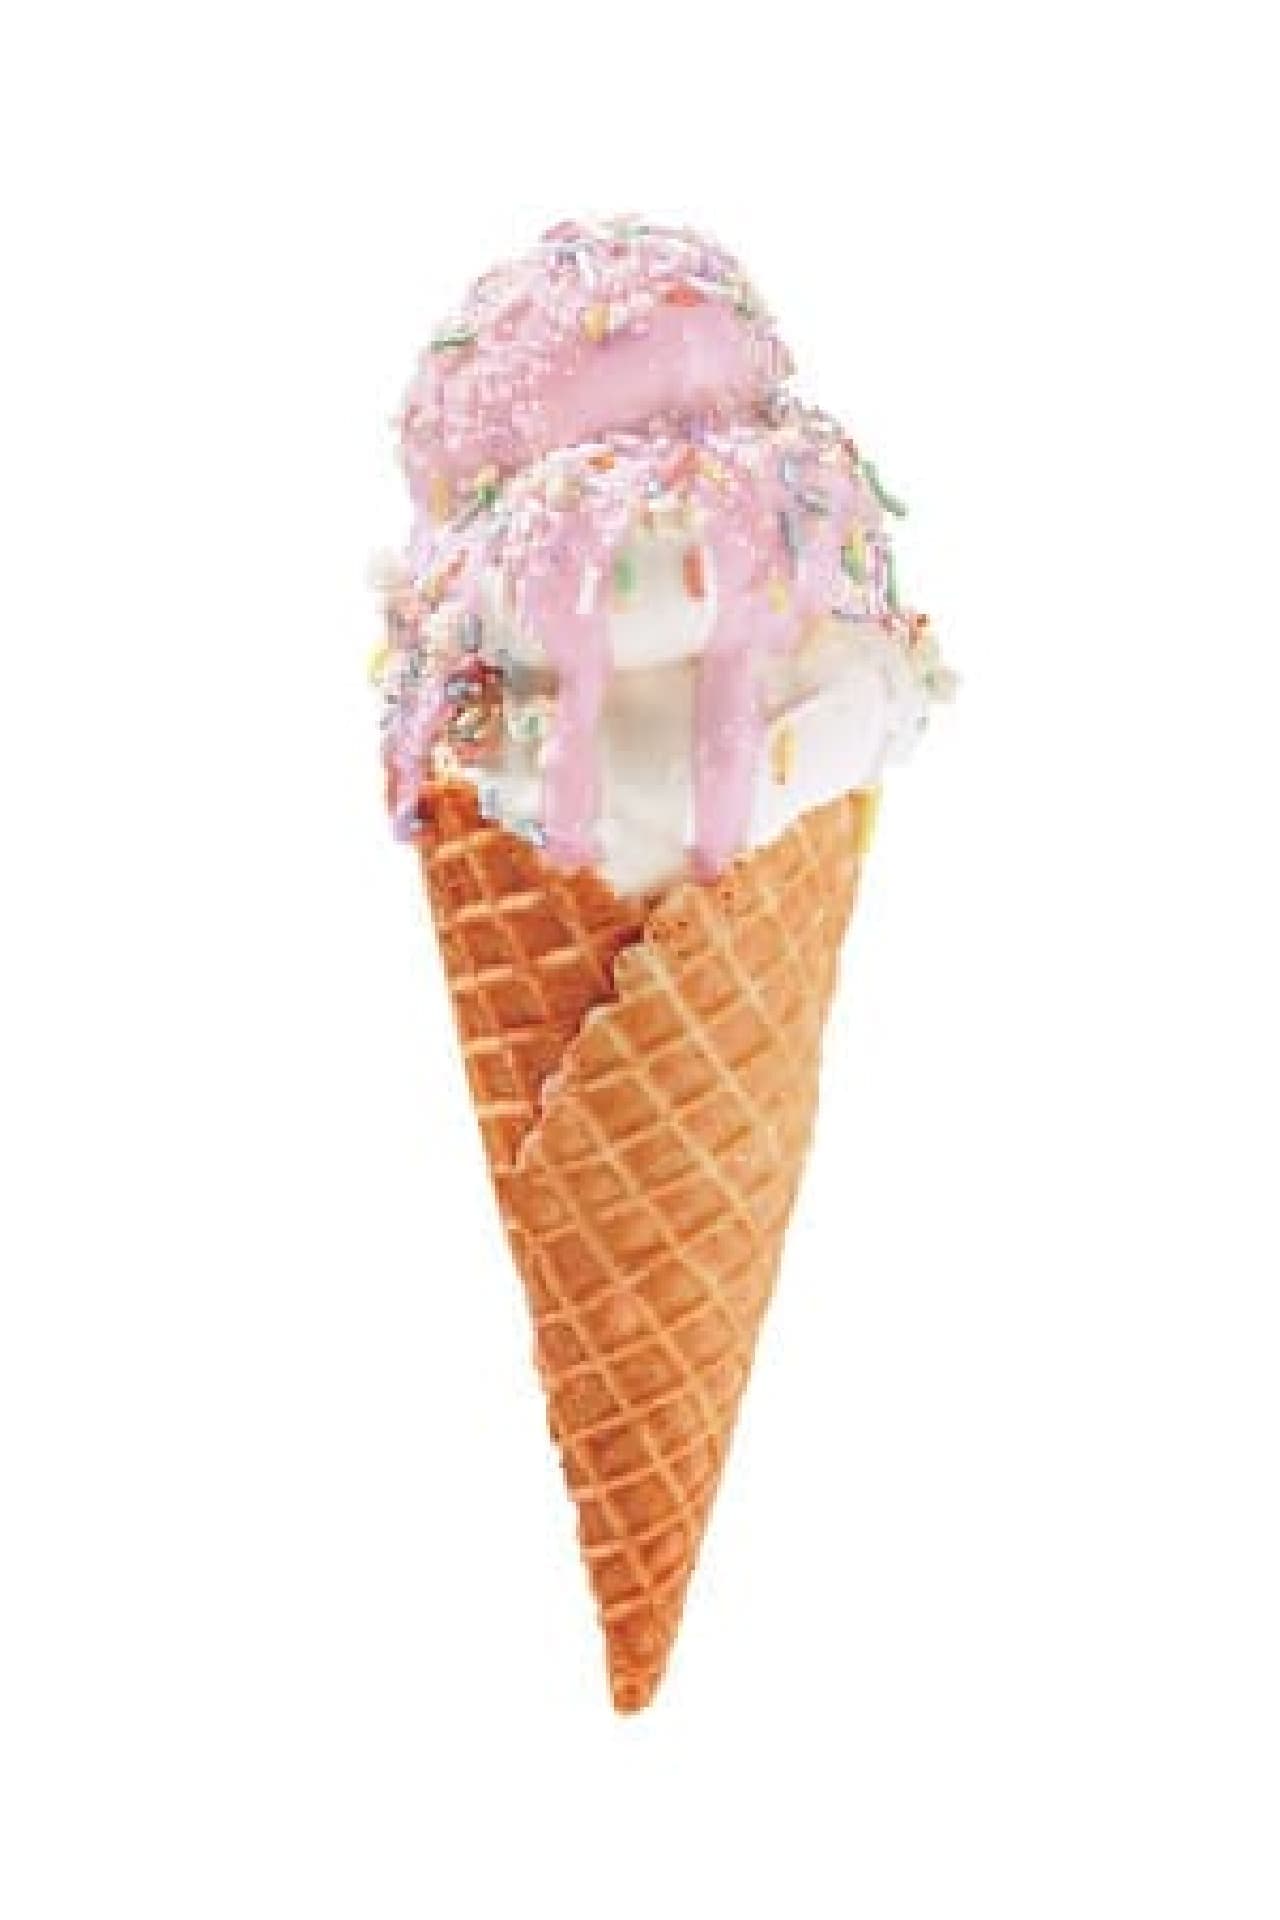 KKD「オリジナル・グレーズド ソフトクリーム」日本初上陸！人気No.1ドーナツの味わいが濃厚ソフトクリームに